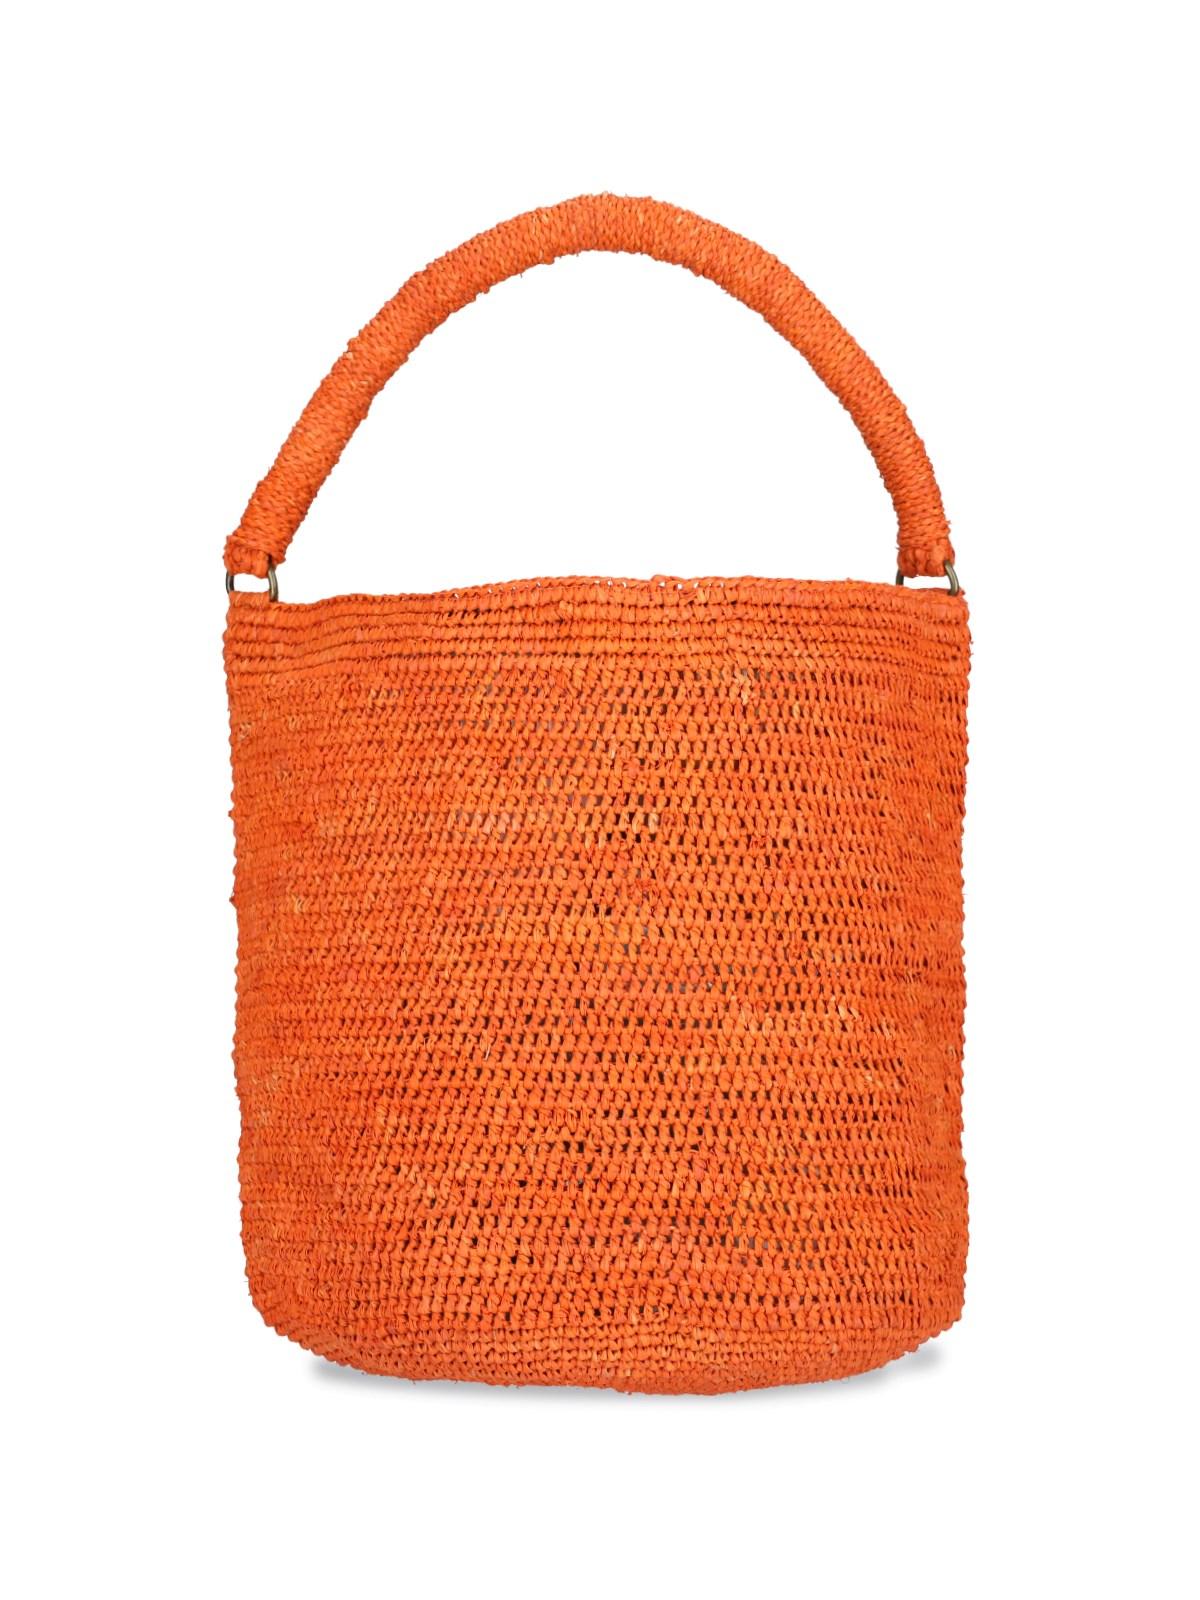 Ibeliv Siny Bucket Bag In Orange